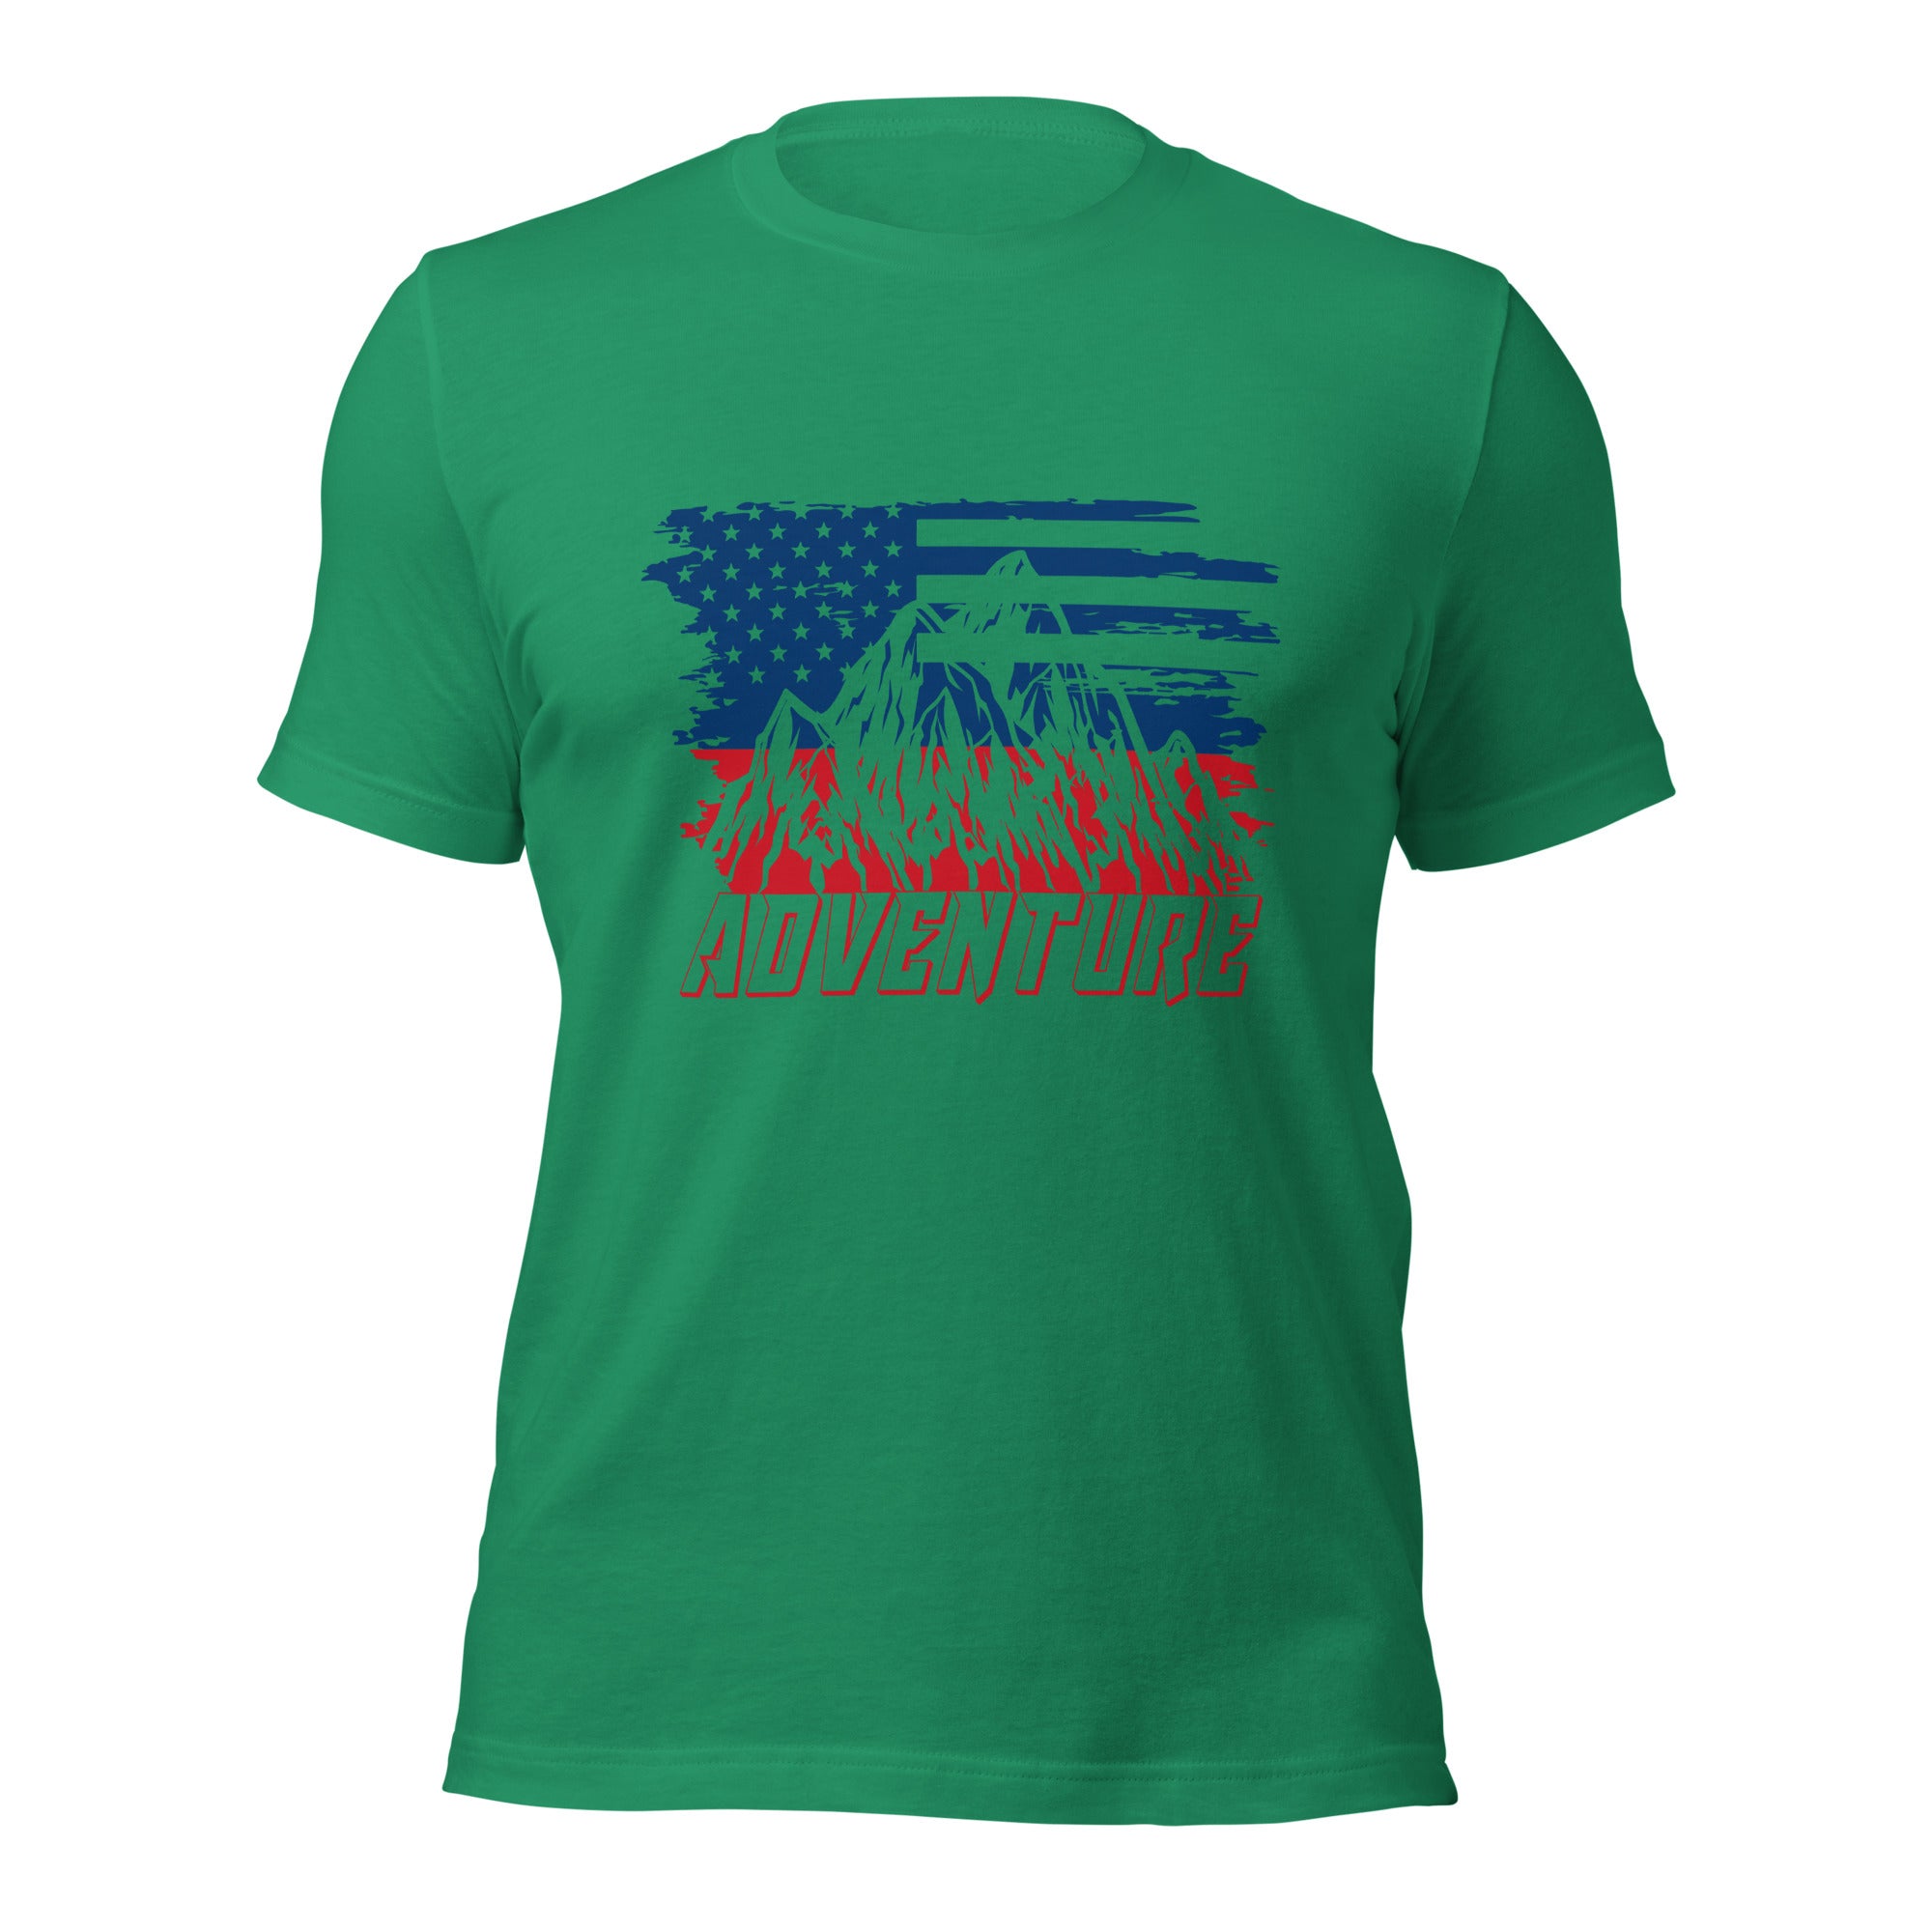 Adventure US Flag T-Shirt